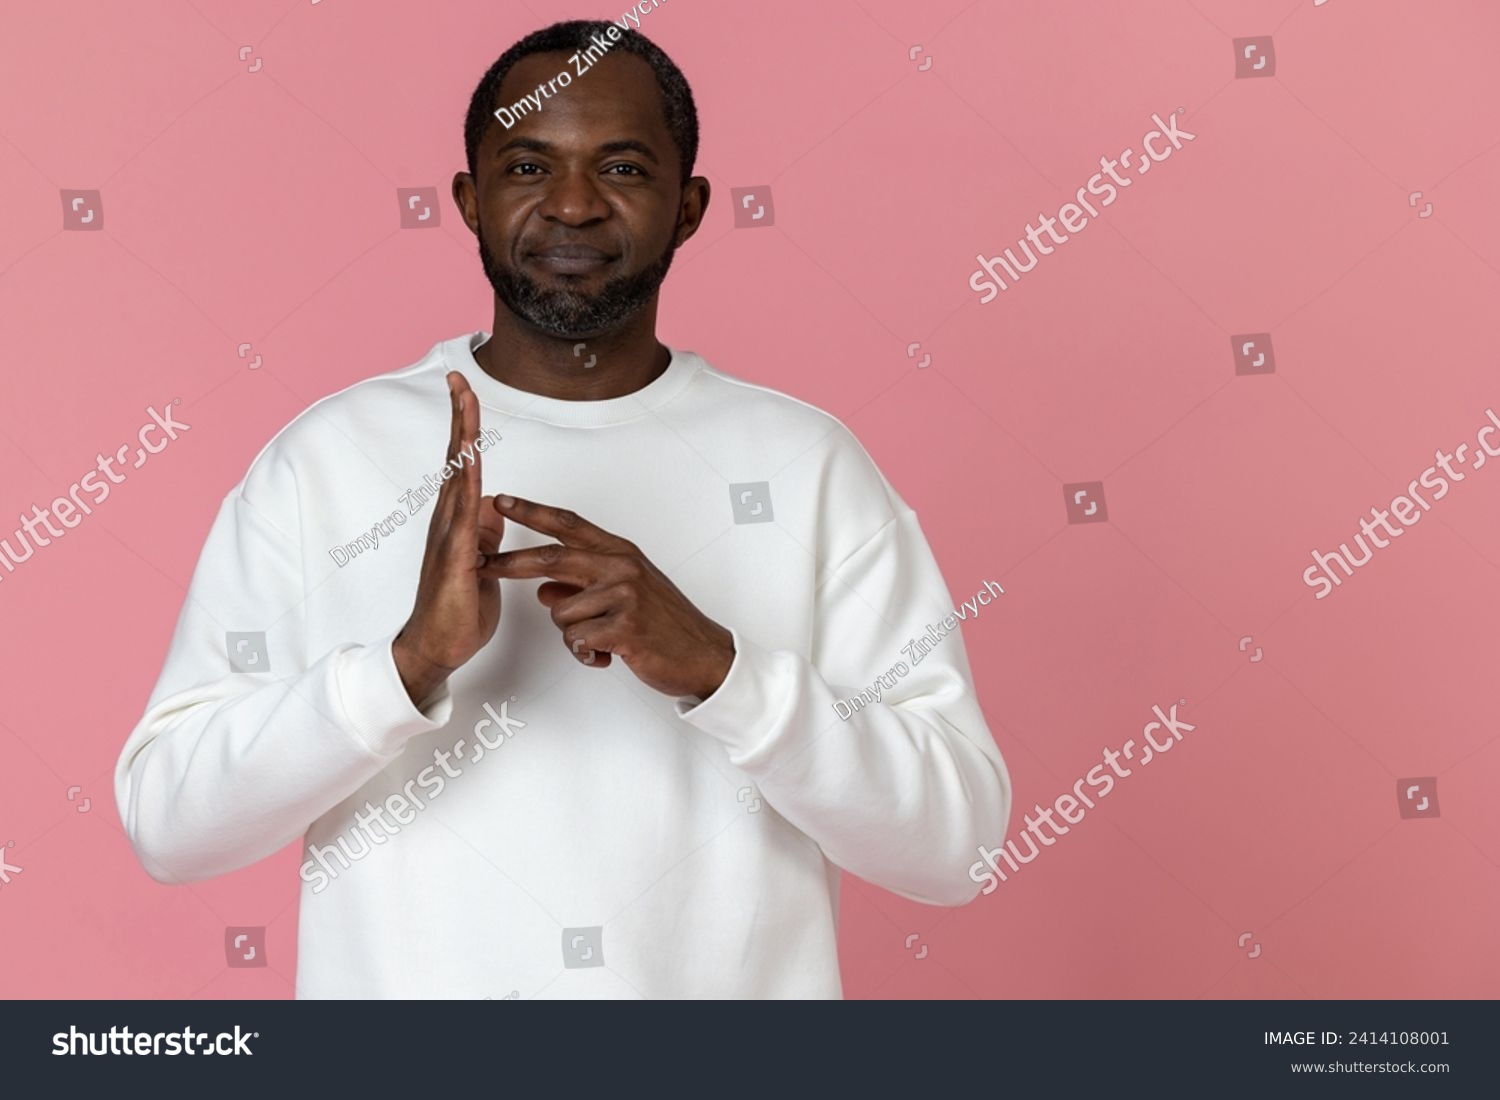 Deaf mute black man wearing white sweatshirt gesturing sign language #2414108001